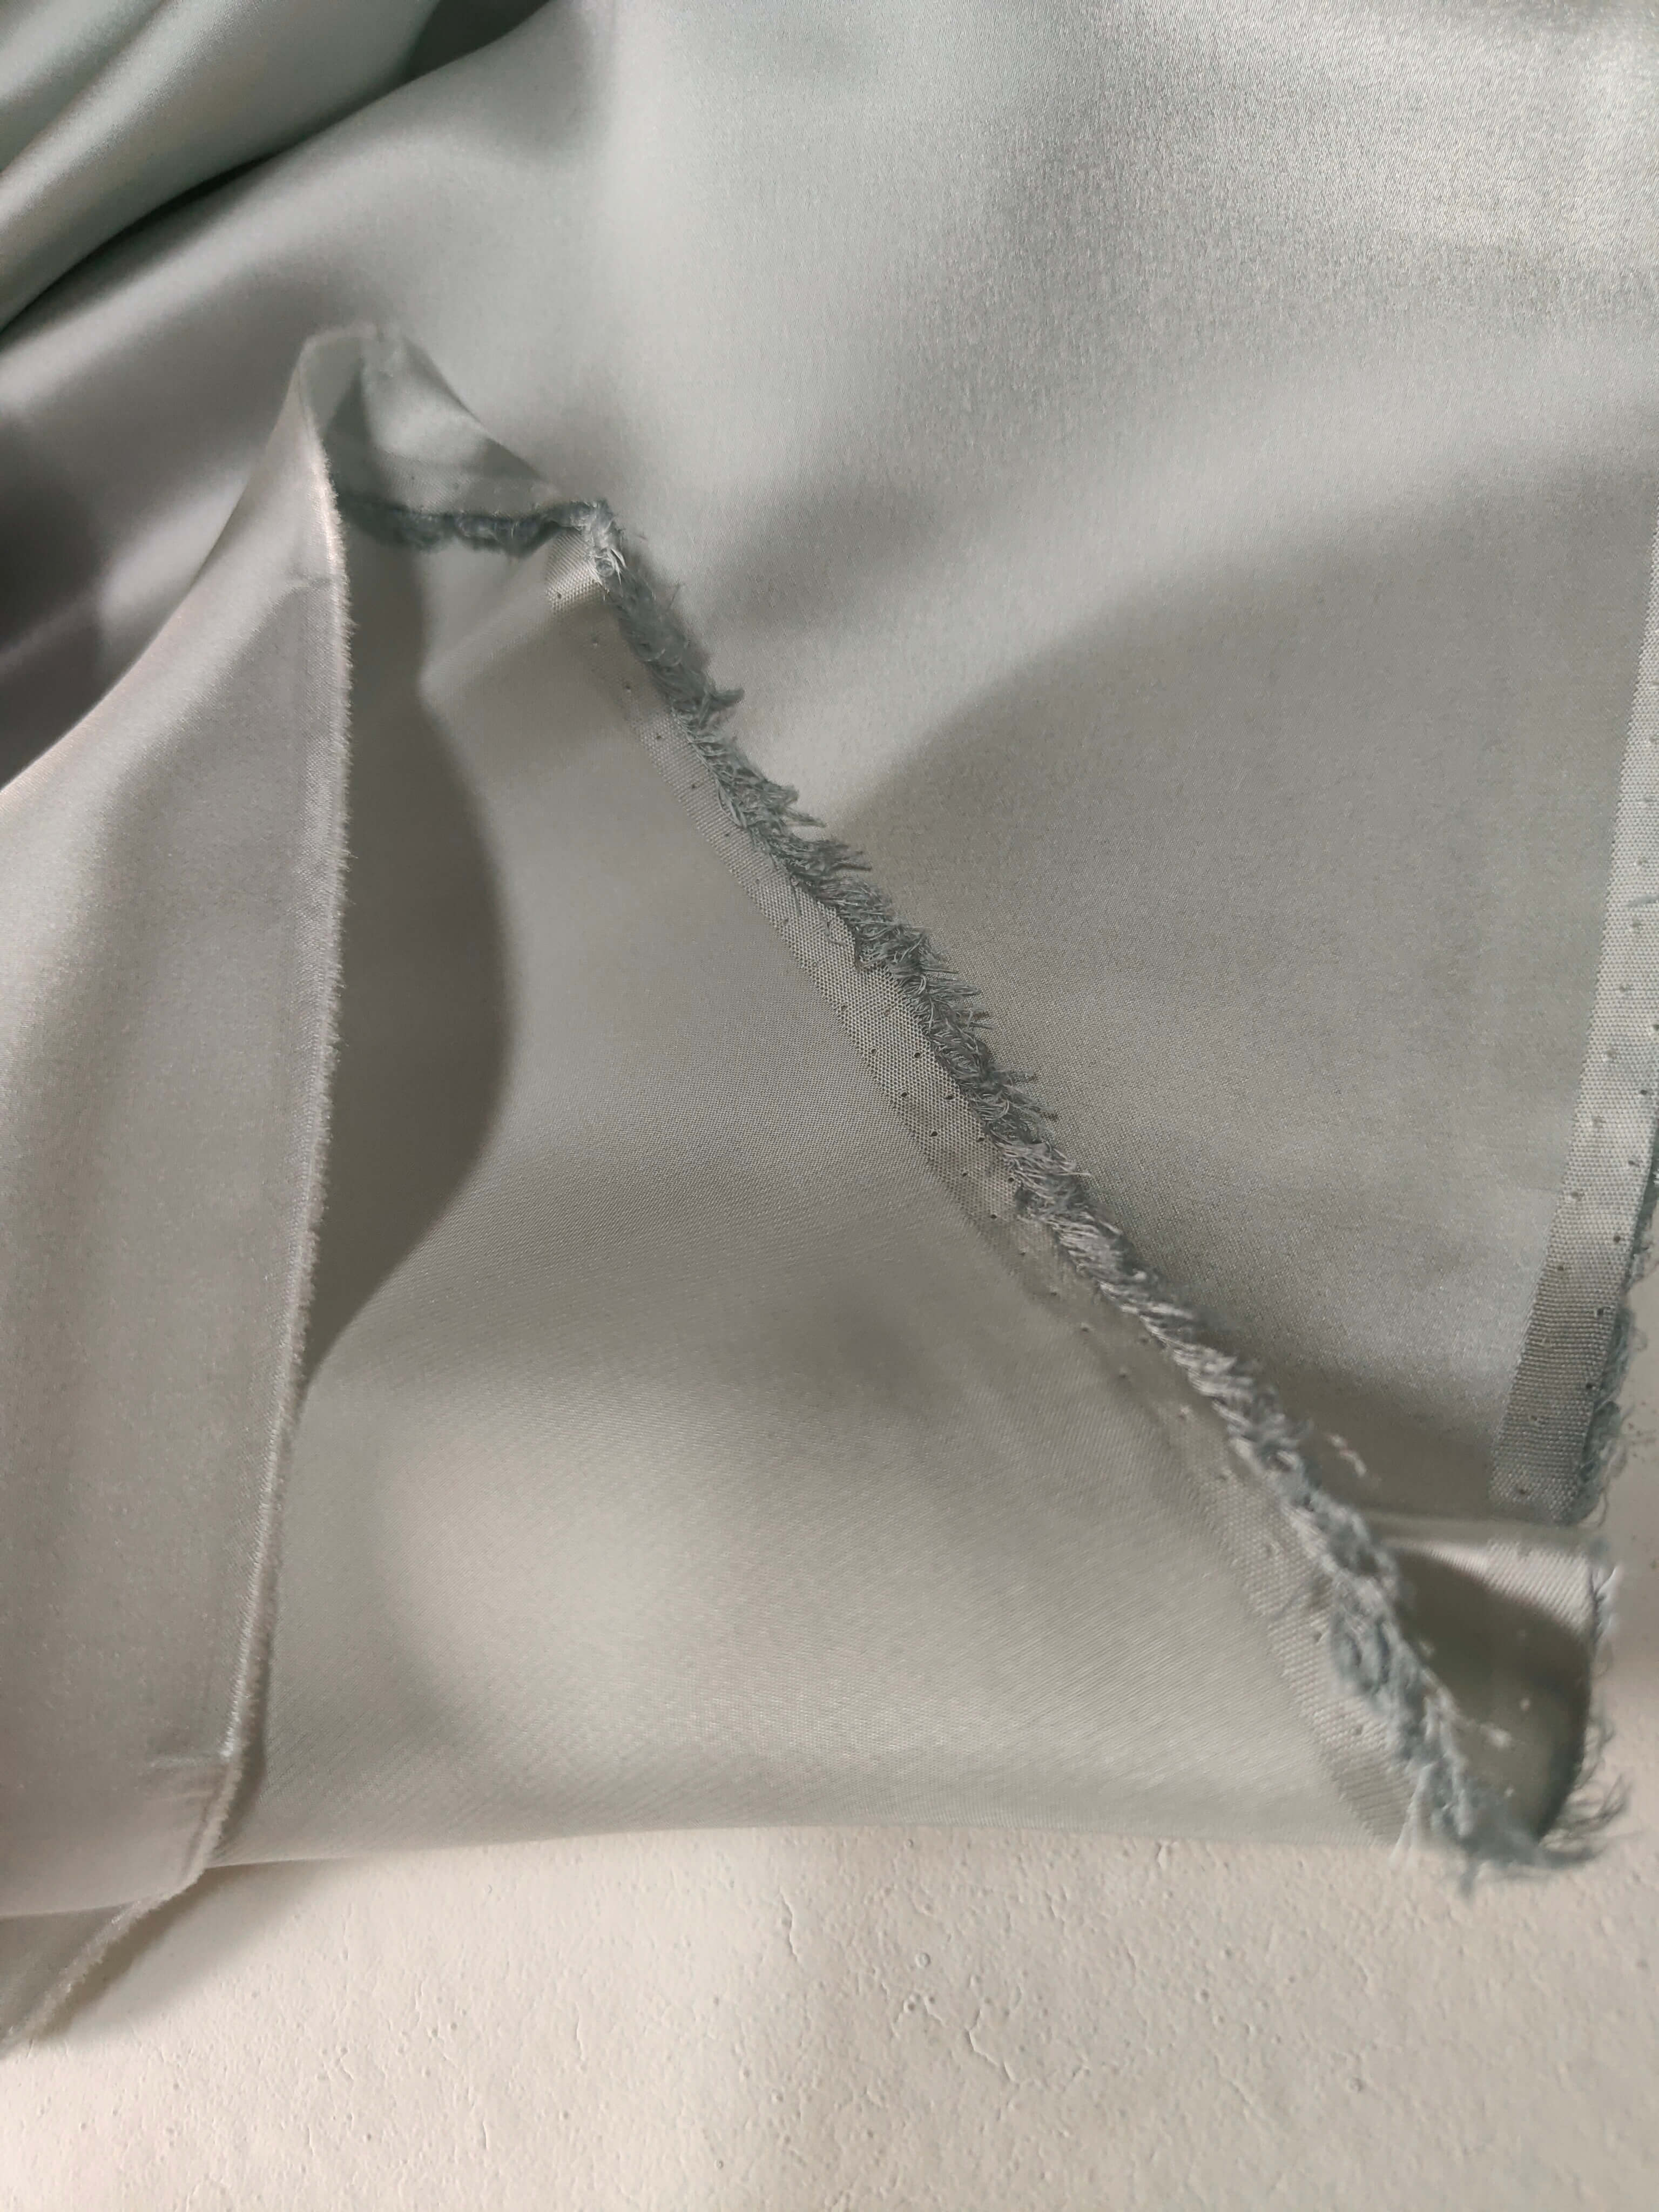 Bulk Silk Fabric Custom Design Silk Clothing Fabric